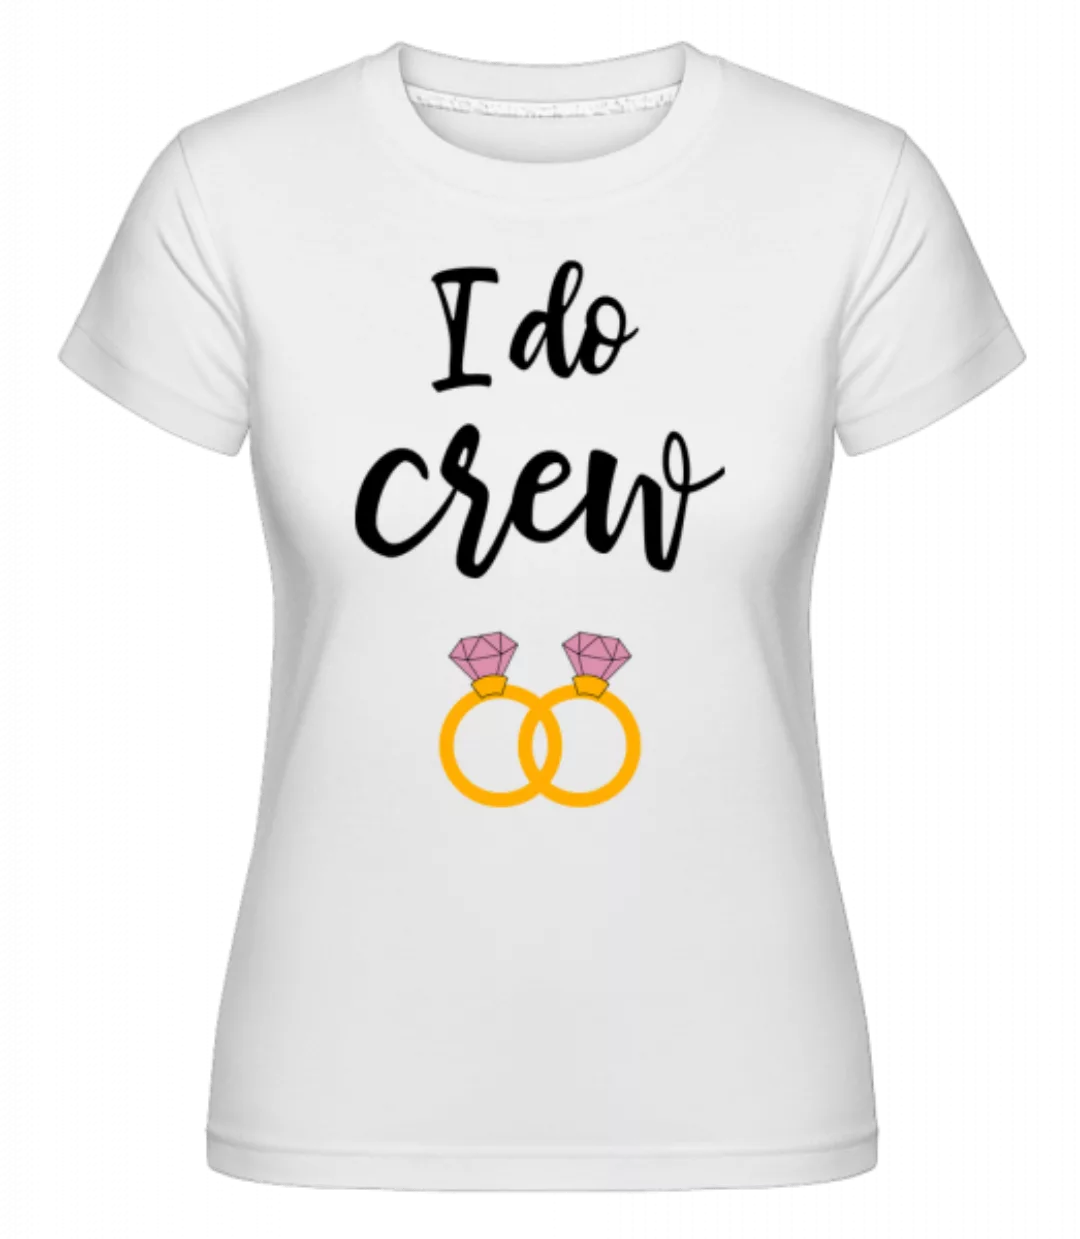 I Do Crew Rings · Shirtinator Frauen T-Shirt günstig online kaufen